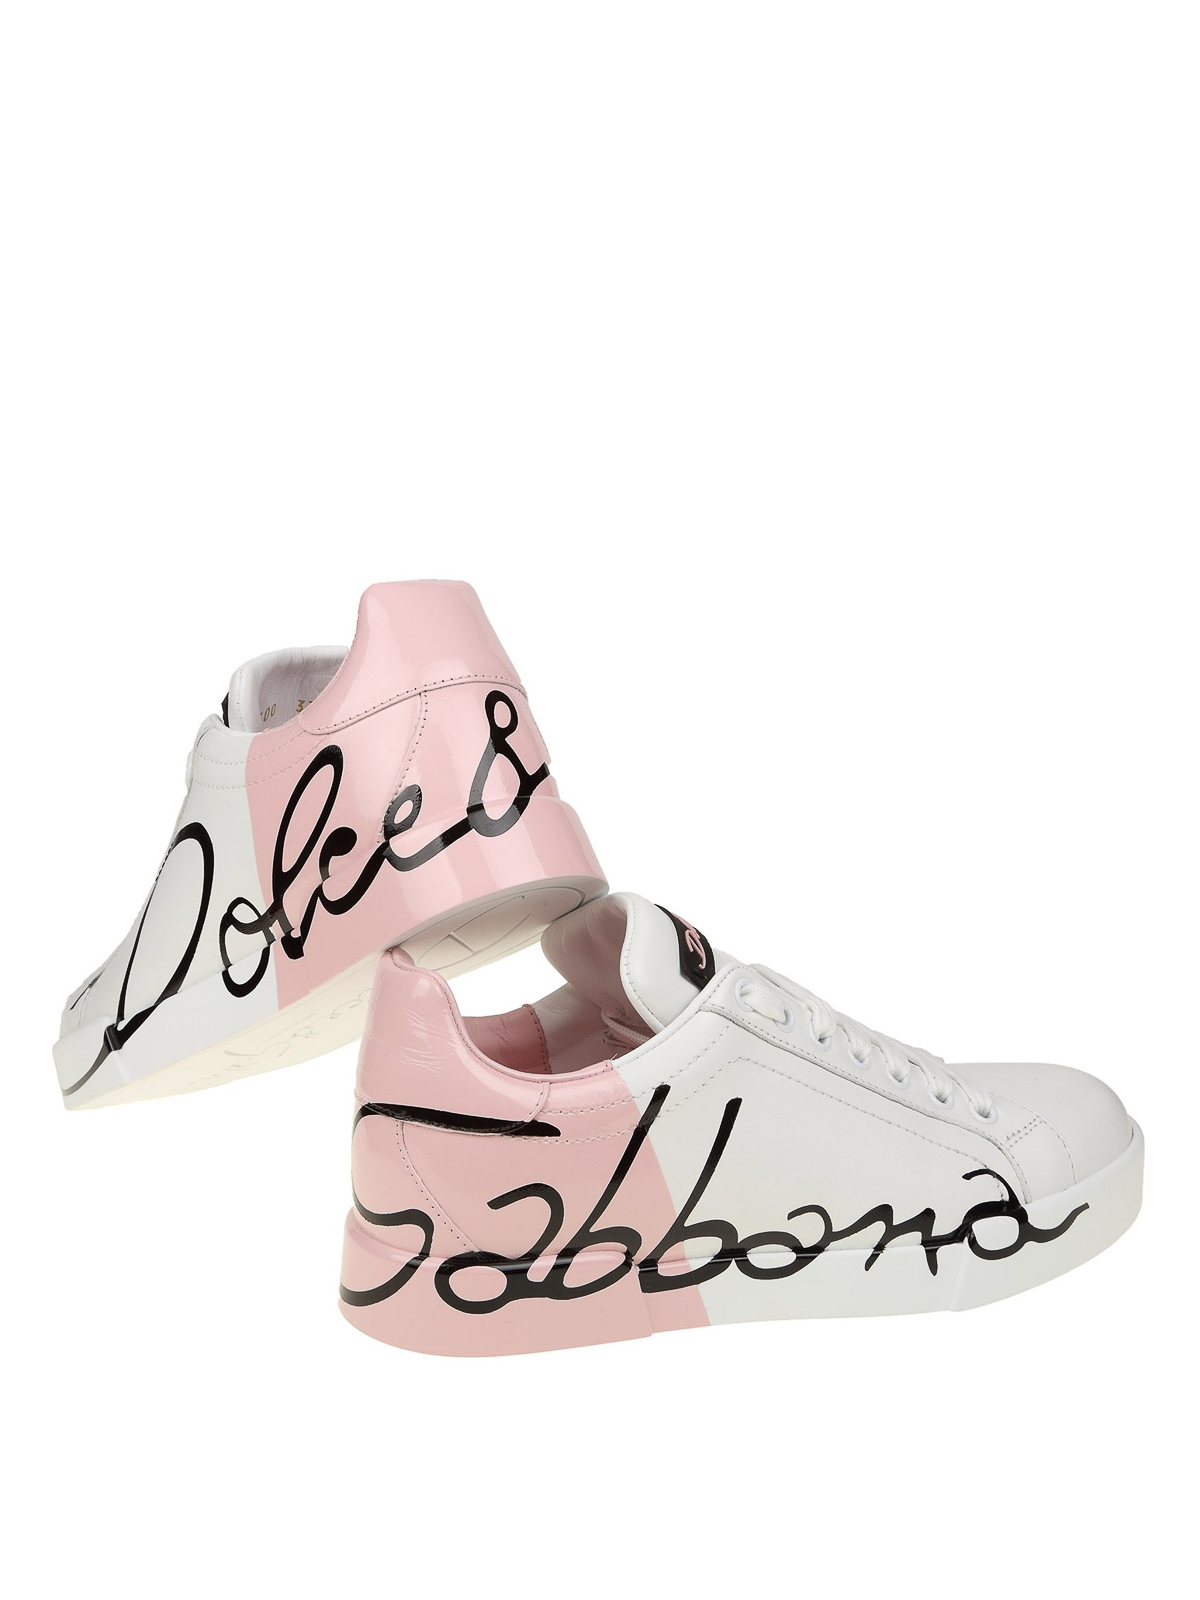 Dolce \u0026 Gabbana - Sneaker Portofino bianche e rosa - sneakers -  CK1600AI053HW821